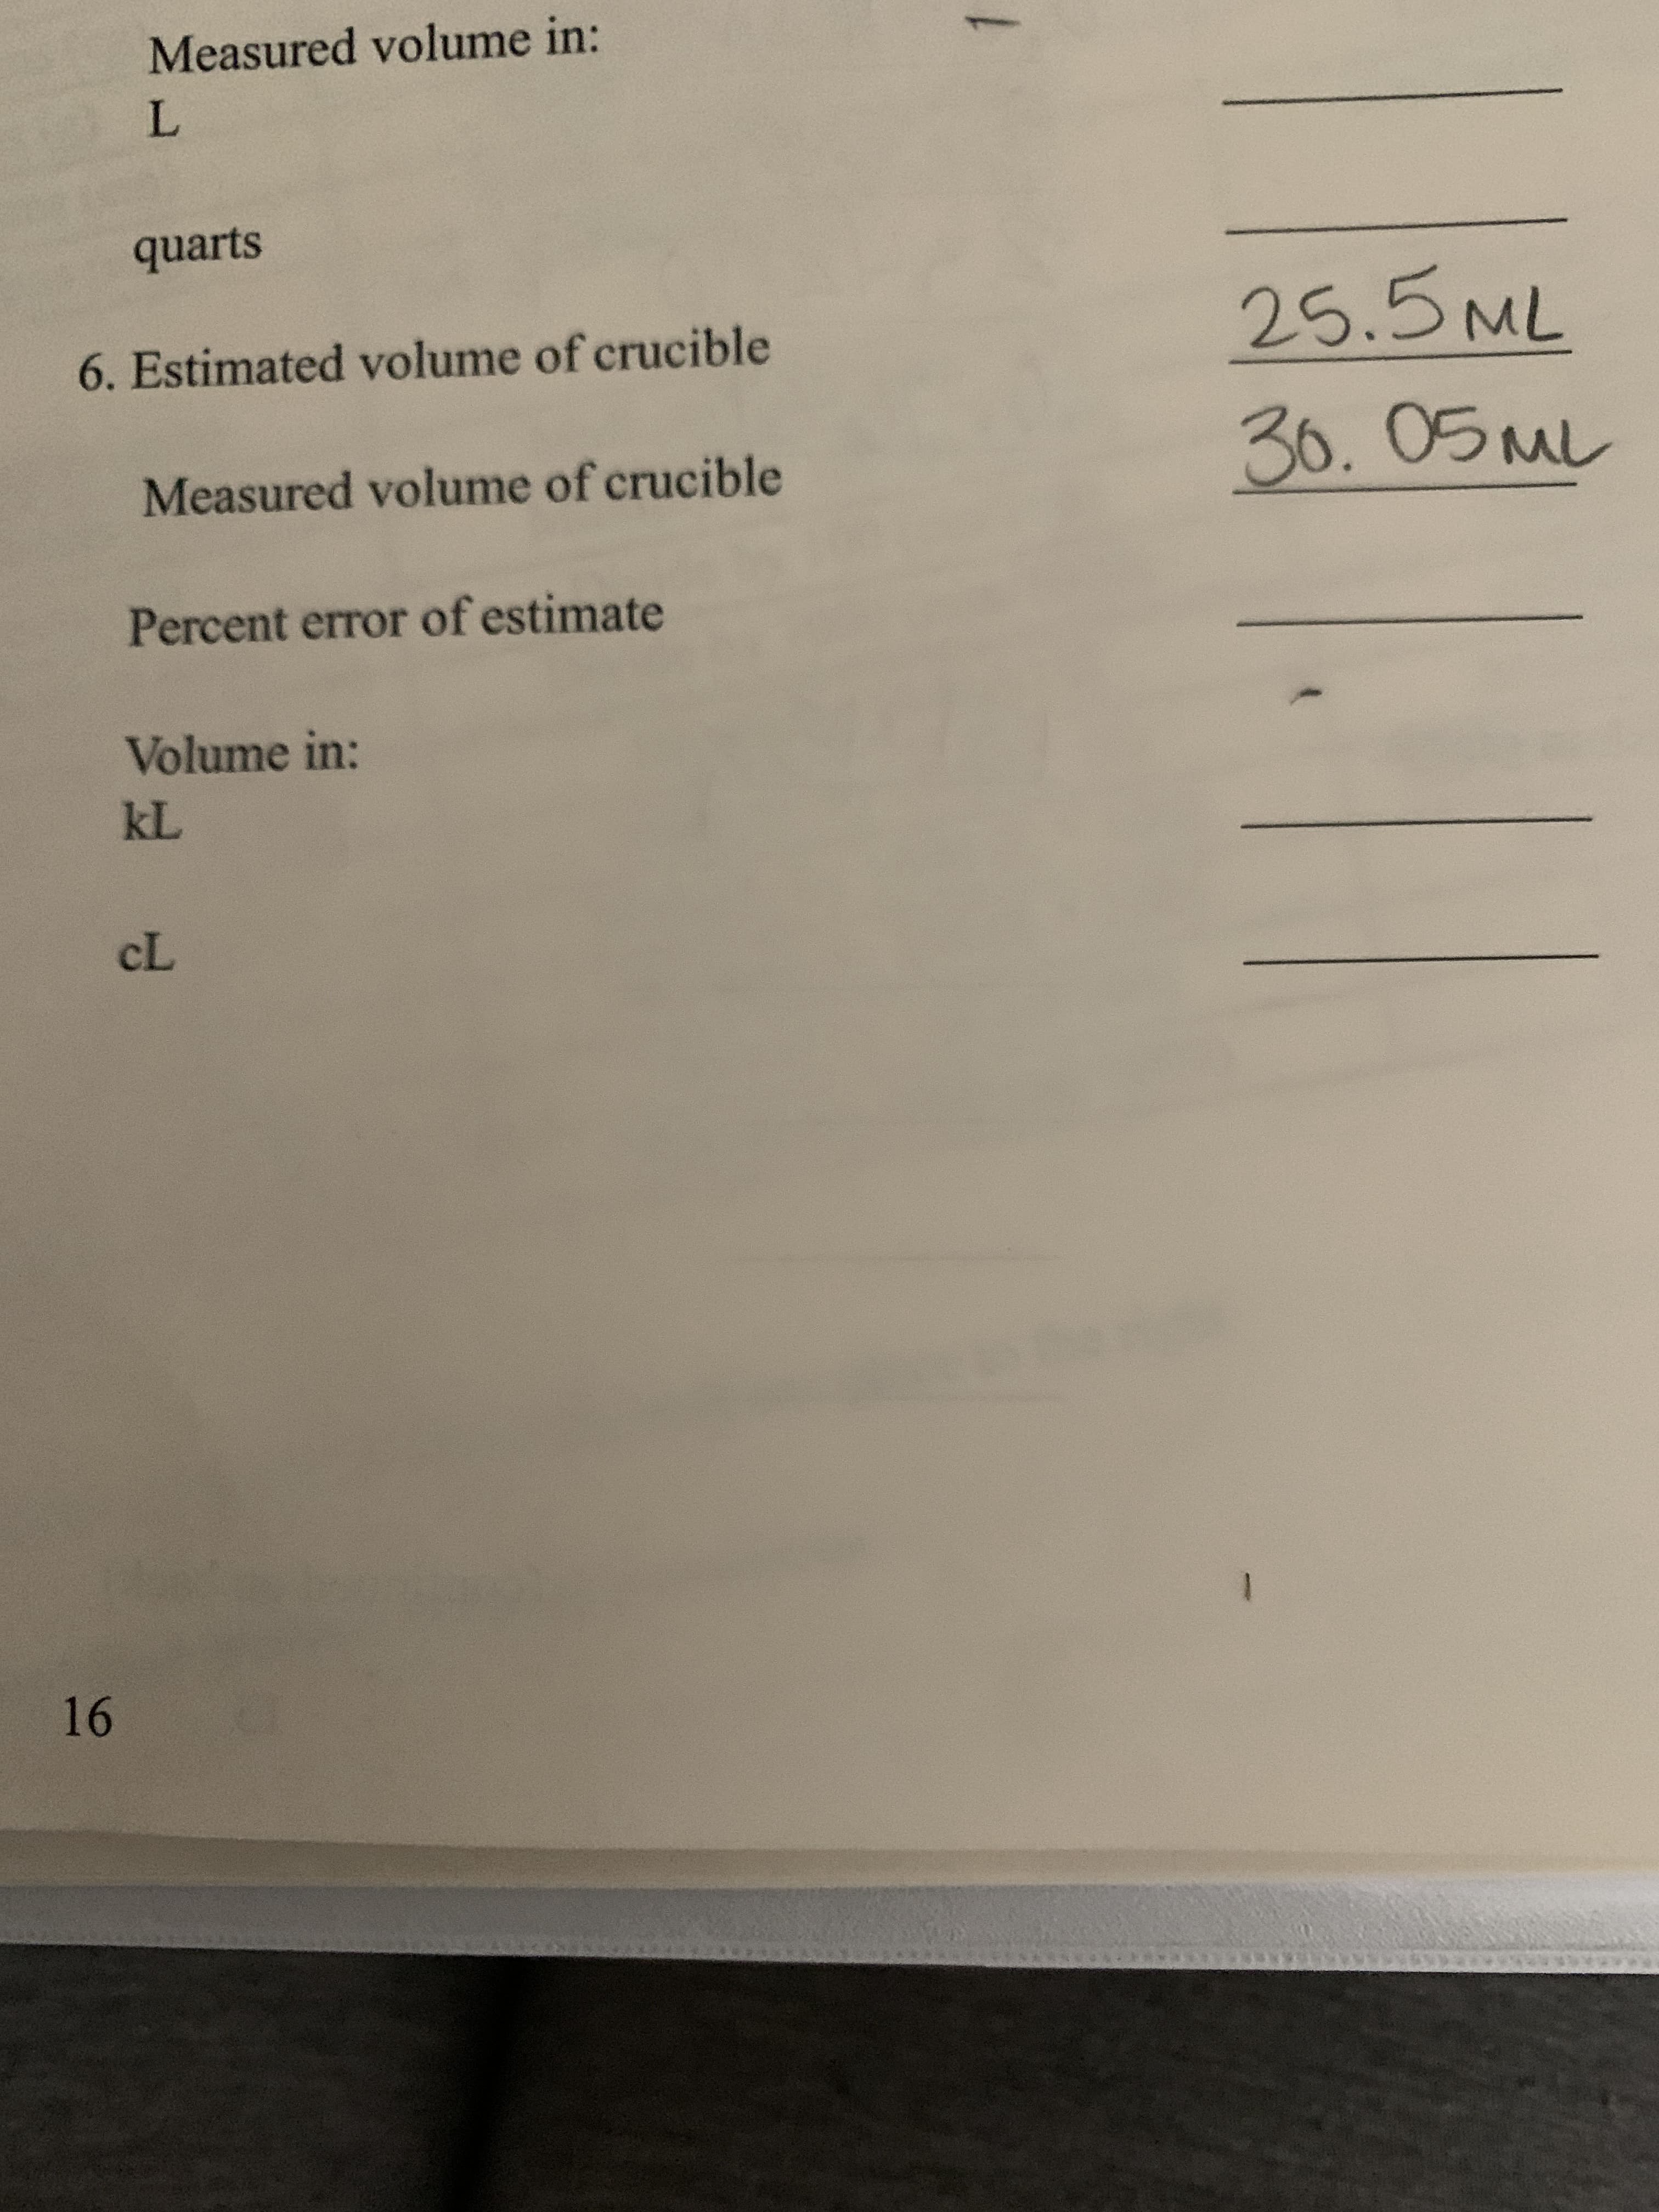 25.5ML
6. Estimated volume of crucible
36.05ML
Measured volume of crucible
Percent error of estimate
Volume in:
kL
cL
